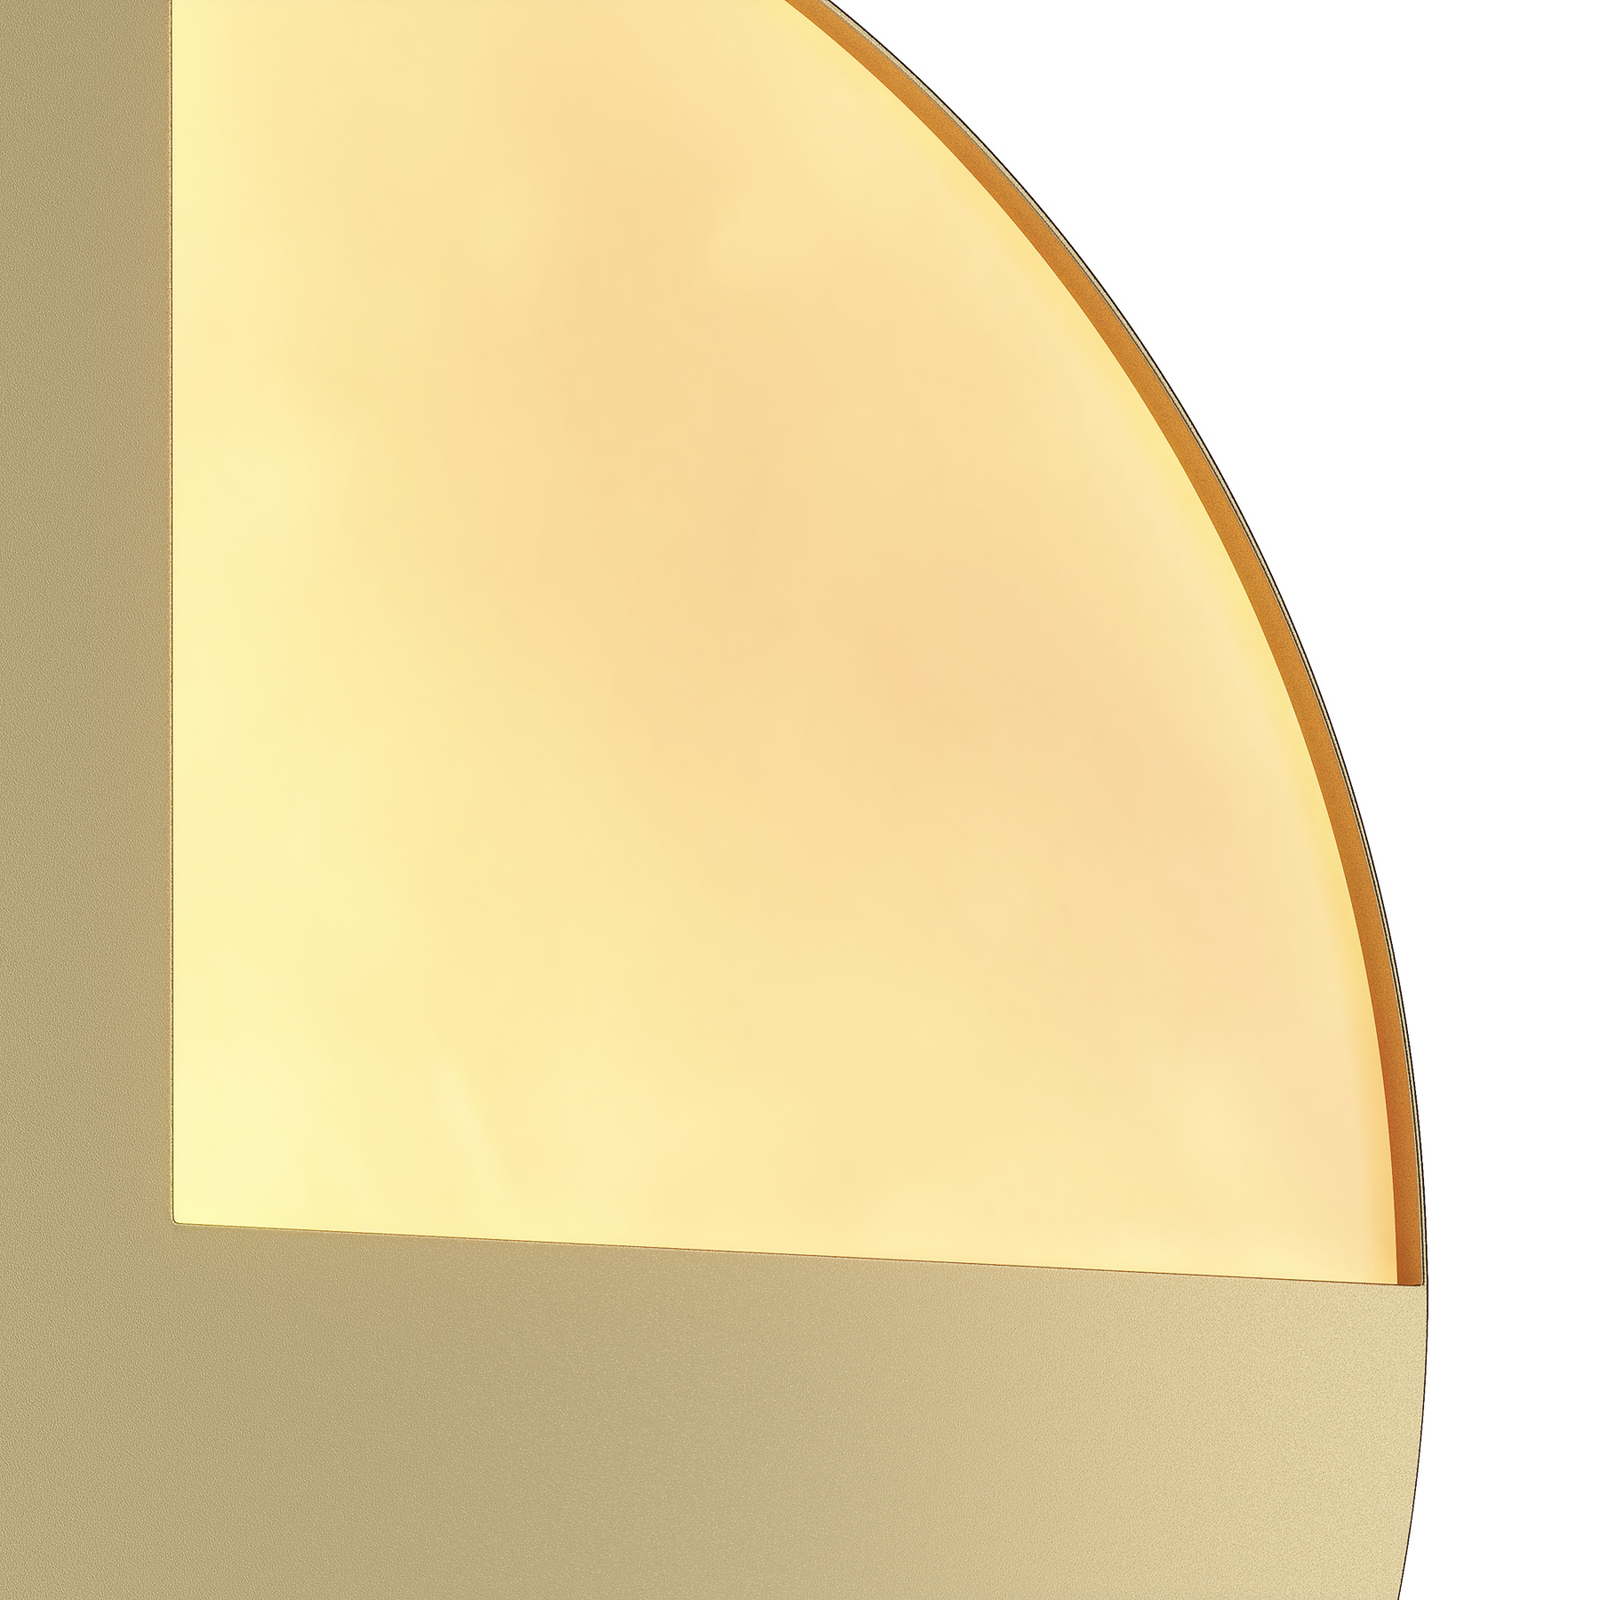 Maytoni LED wandlamp Jupiter, goud, Ø 25cm